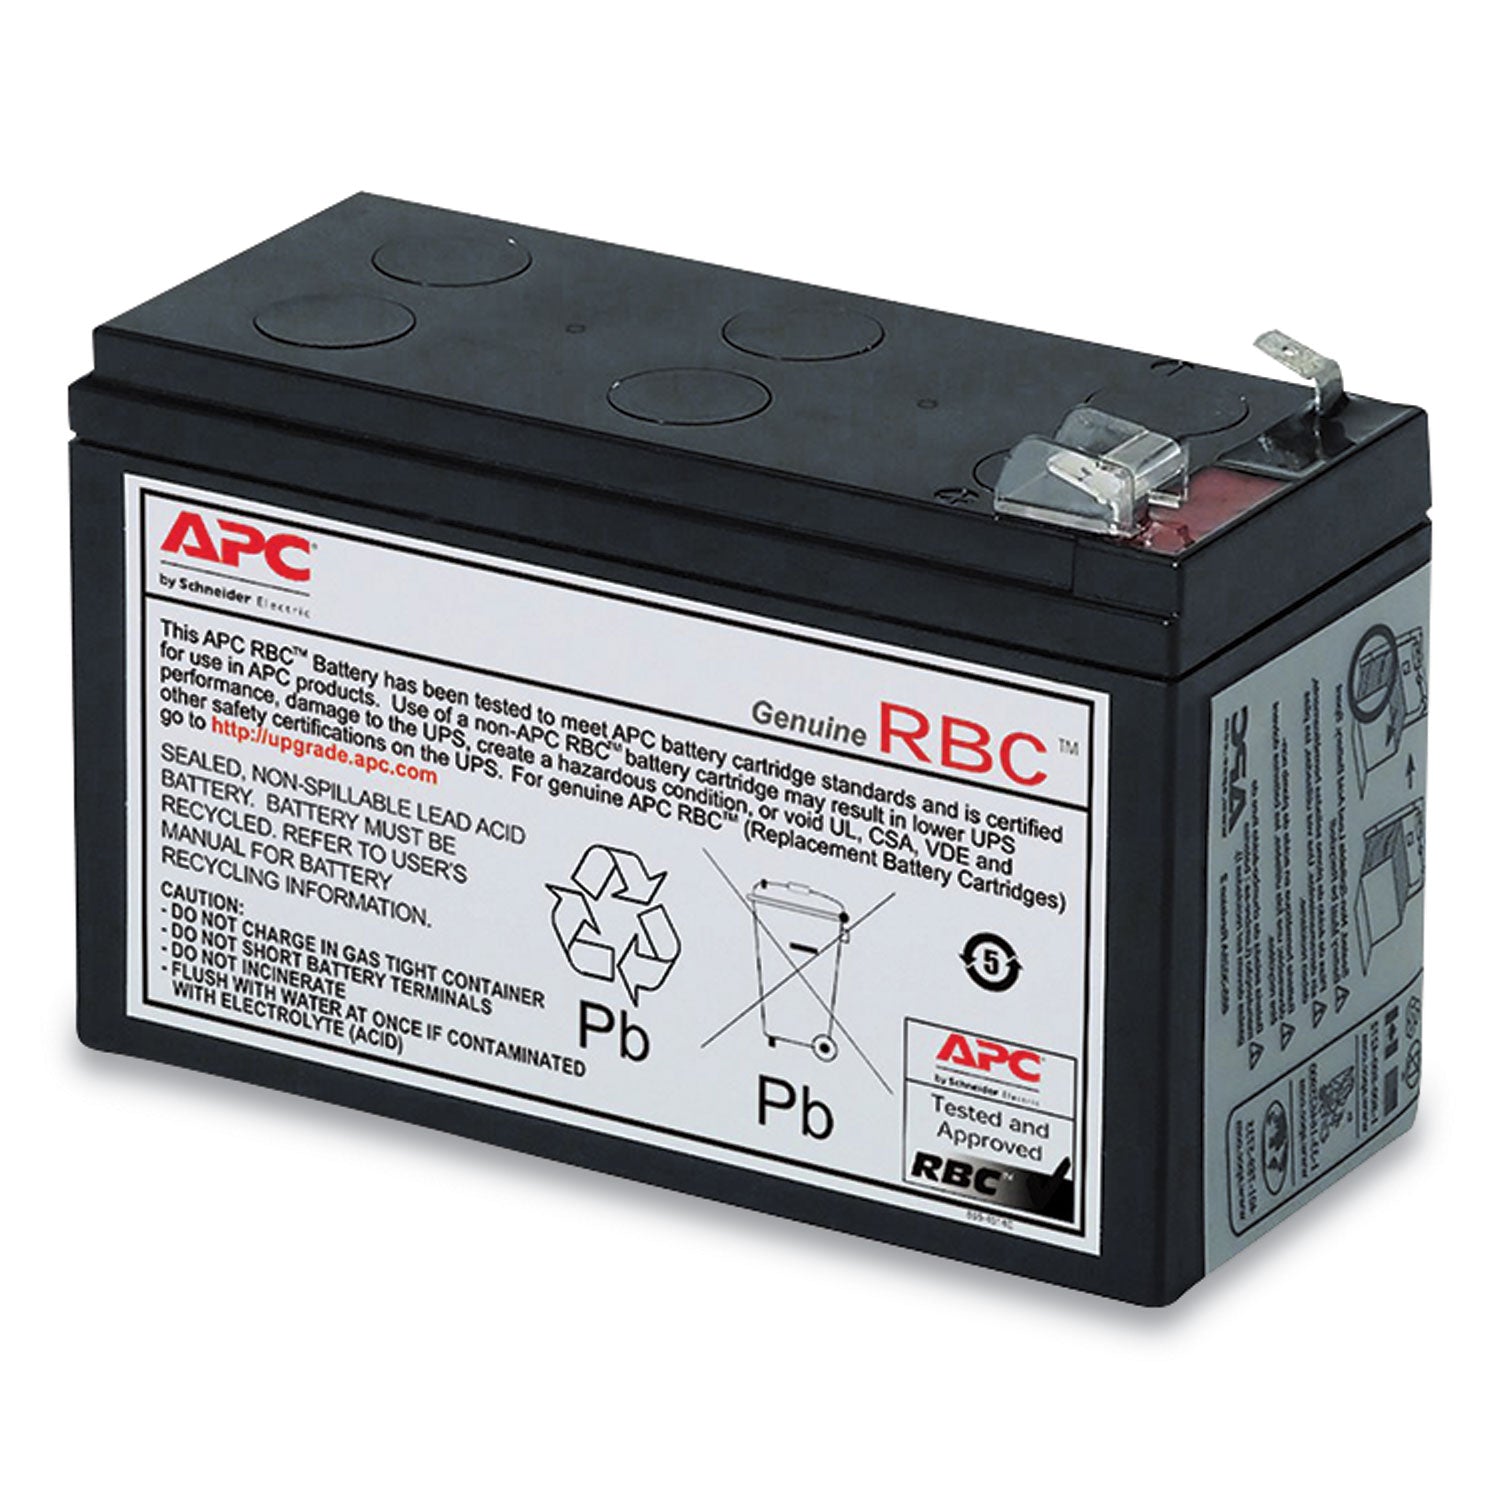 ups-replacement-battery-cartridge-#17-rbc17_seurbc17 - 1